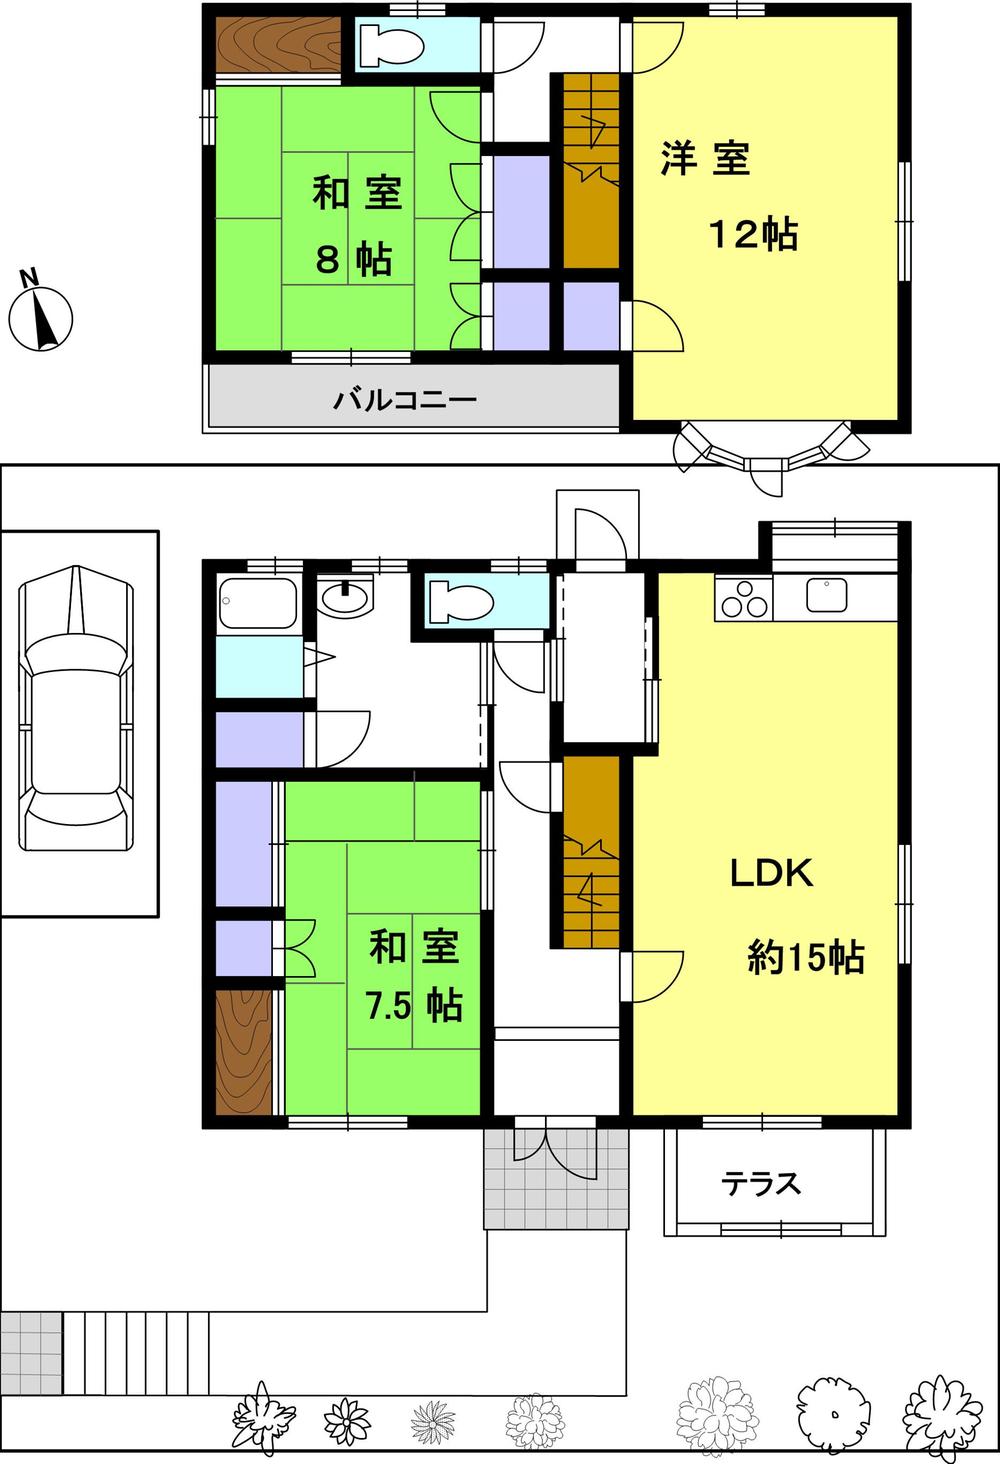 Floor plan. 19,800,000 yen, 3LDK, Land area 178.6 sq m , Building area 116.01 sq m